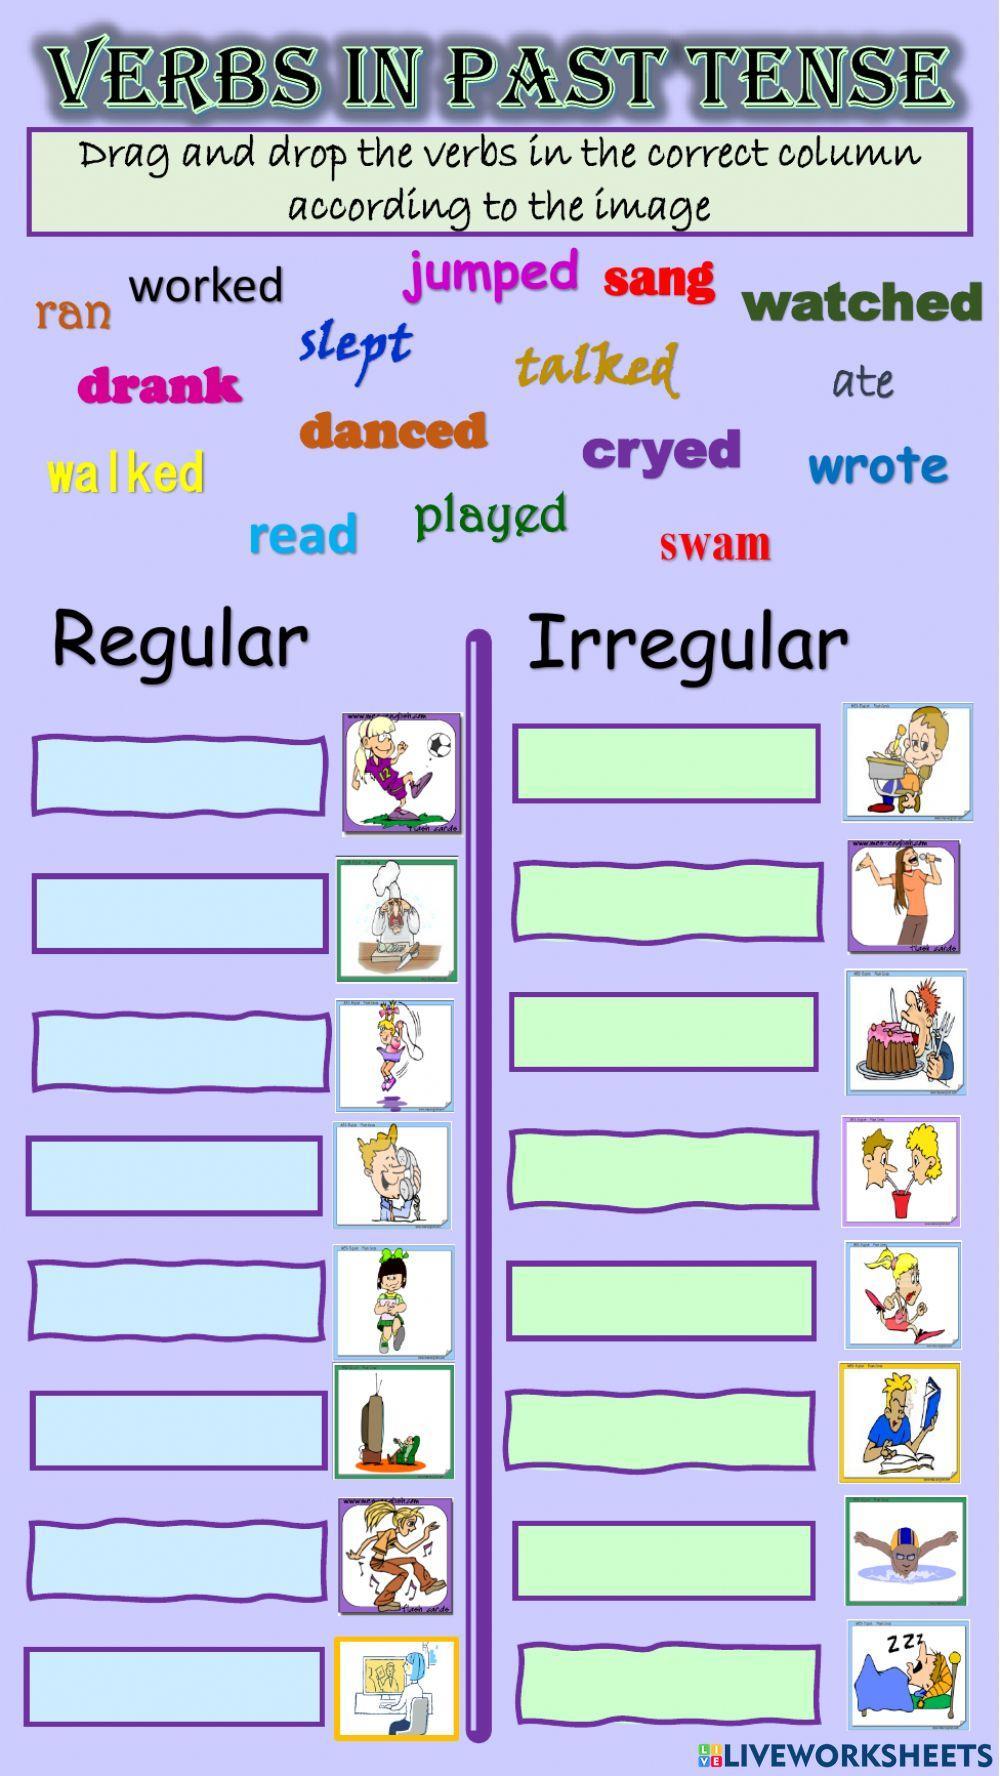 Regular and Irregular verbs